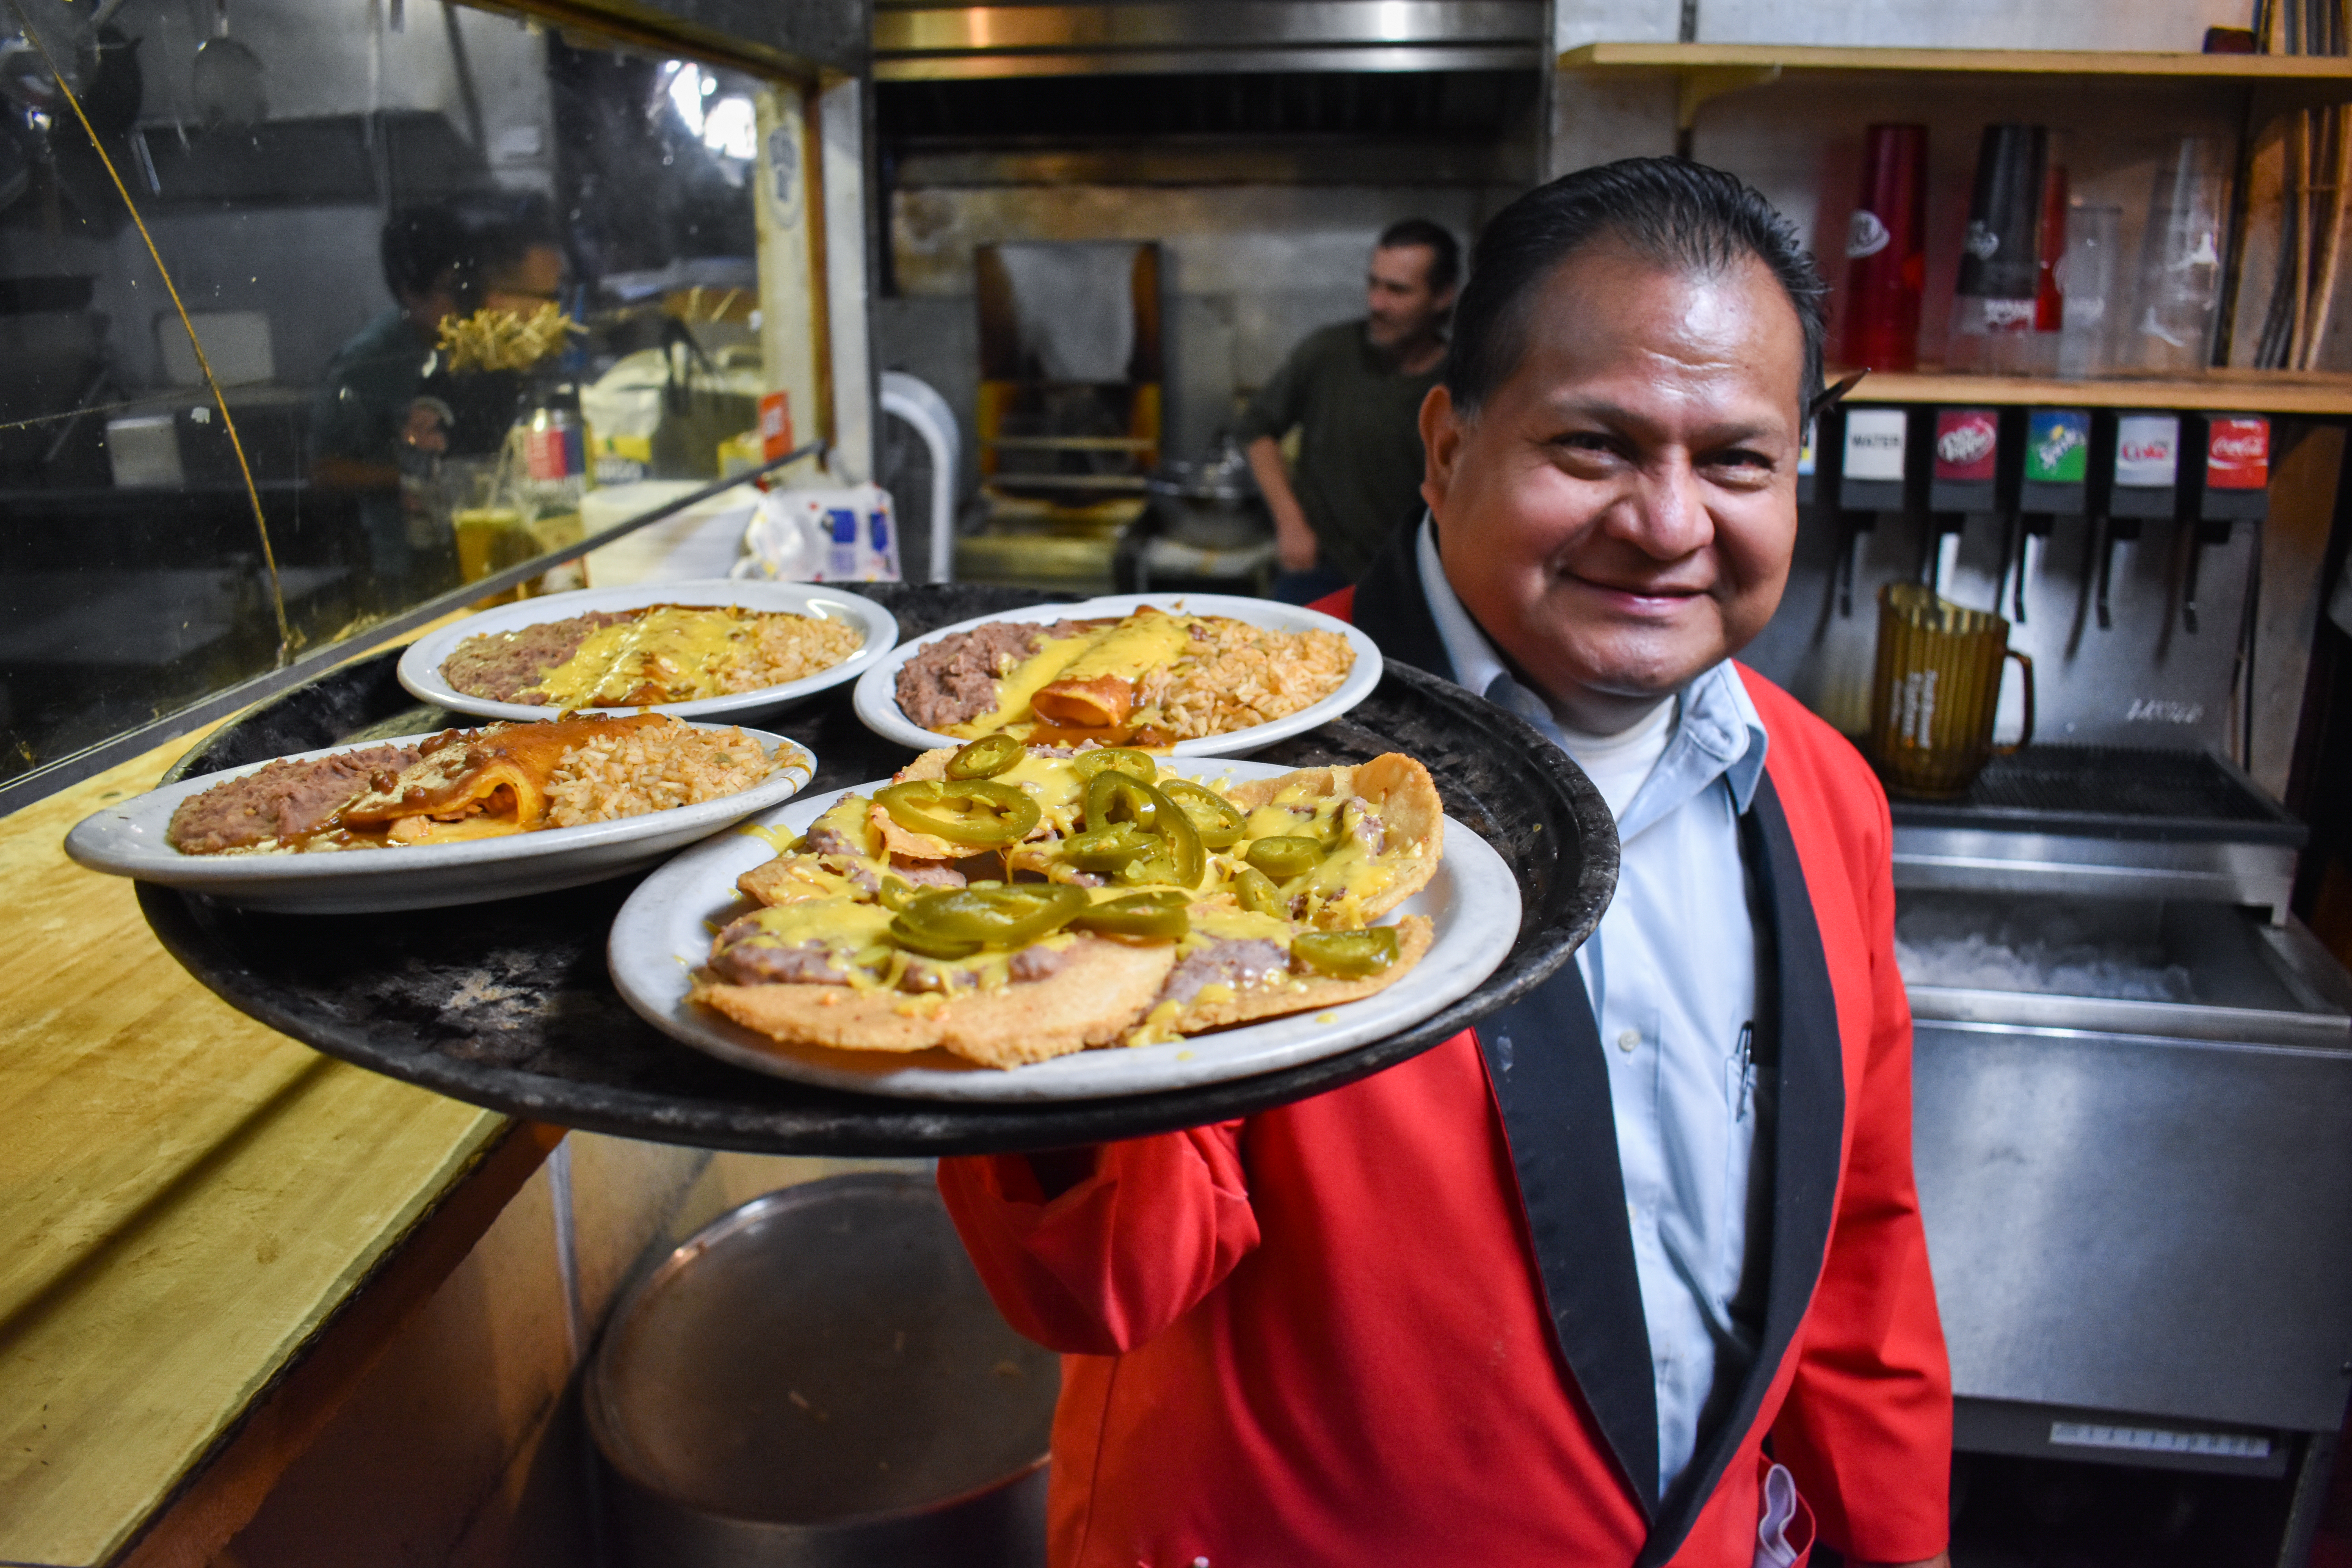 Longtime El Patio waiter Jaime Arriola with a platter of food